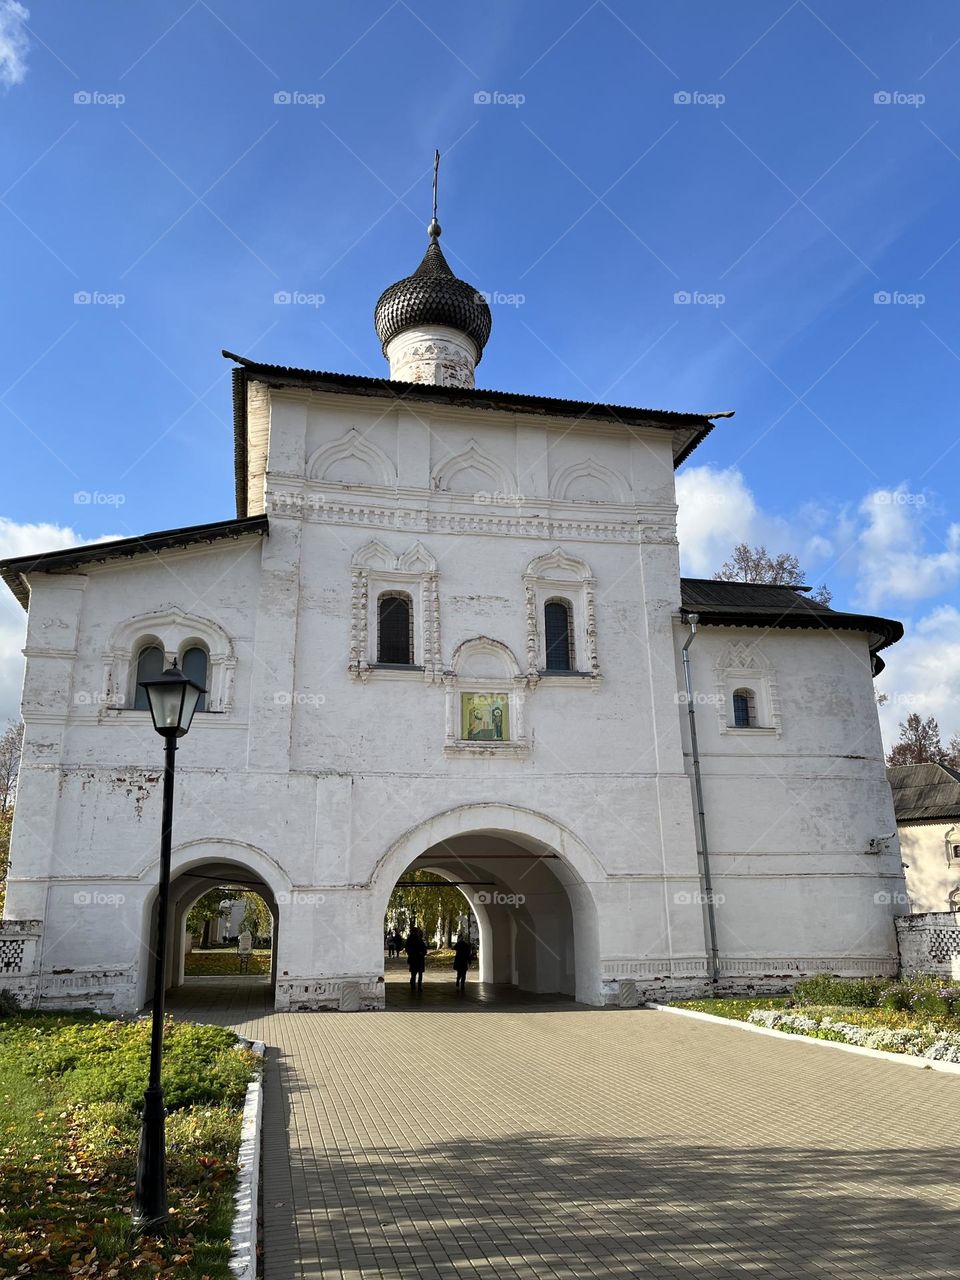 Spaso-Eufimiev Monastery in Suzdal 